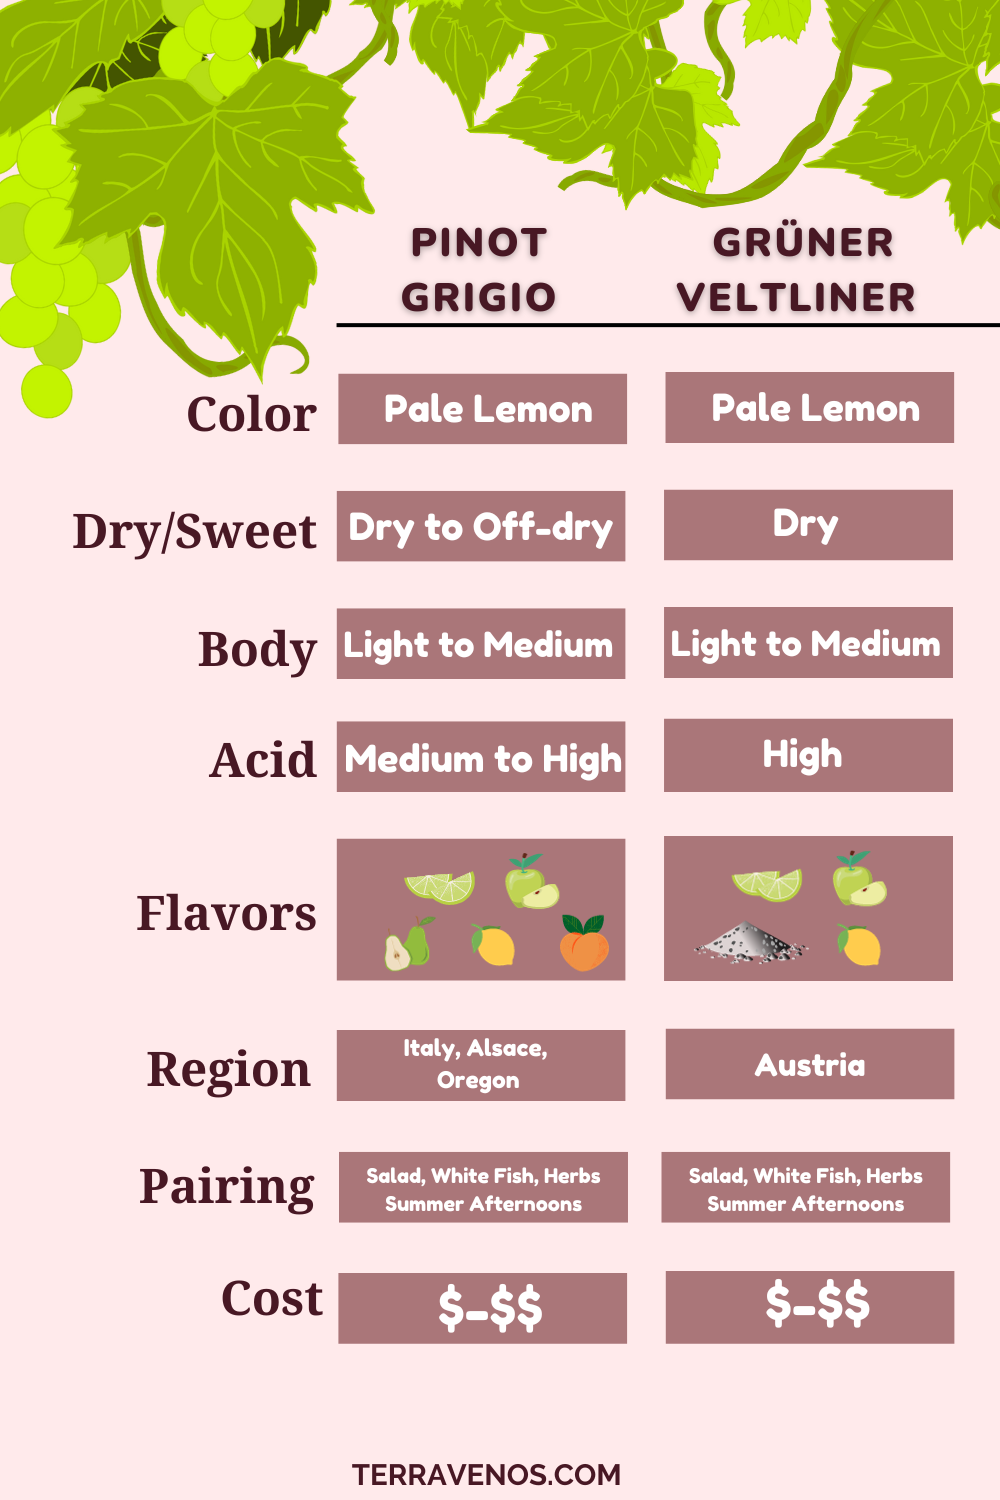 gruner-veltliner-vs-pinot-grigio-white-wine-comparison-infographic